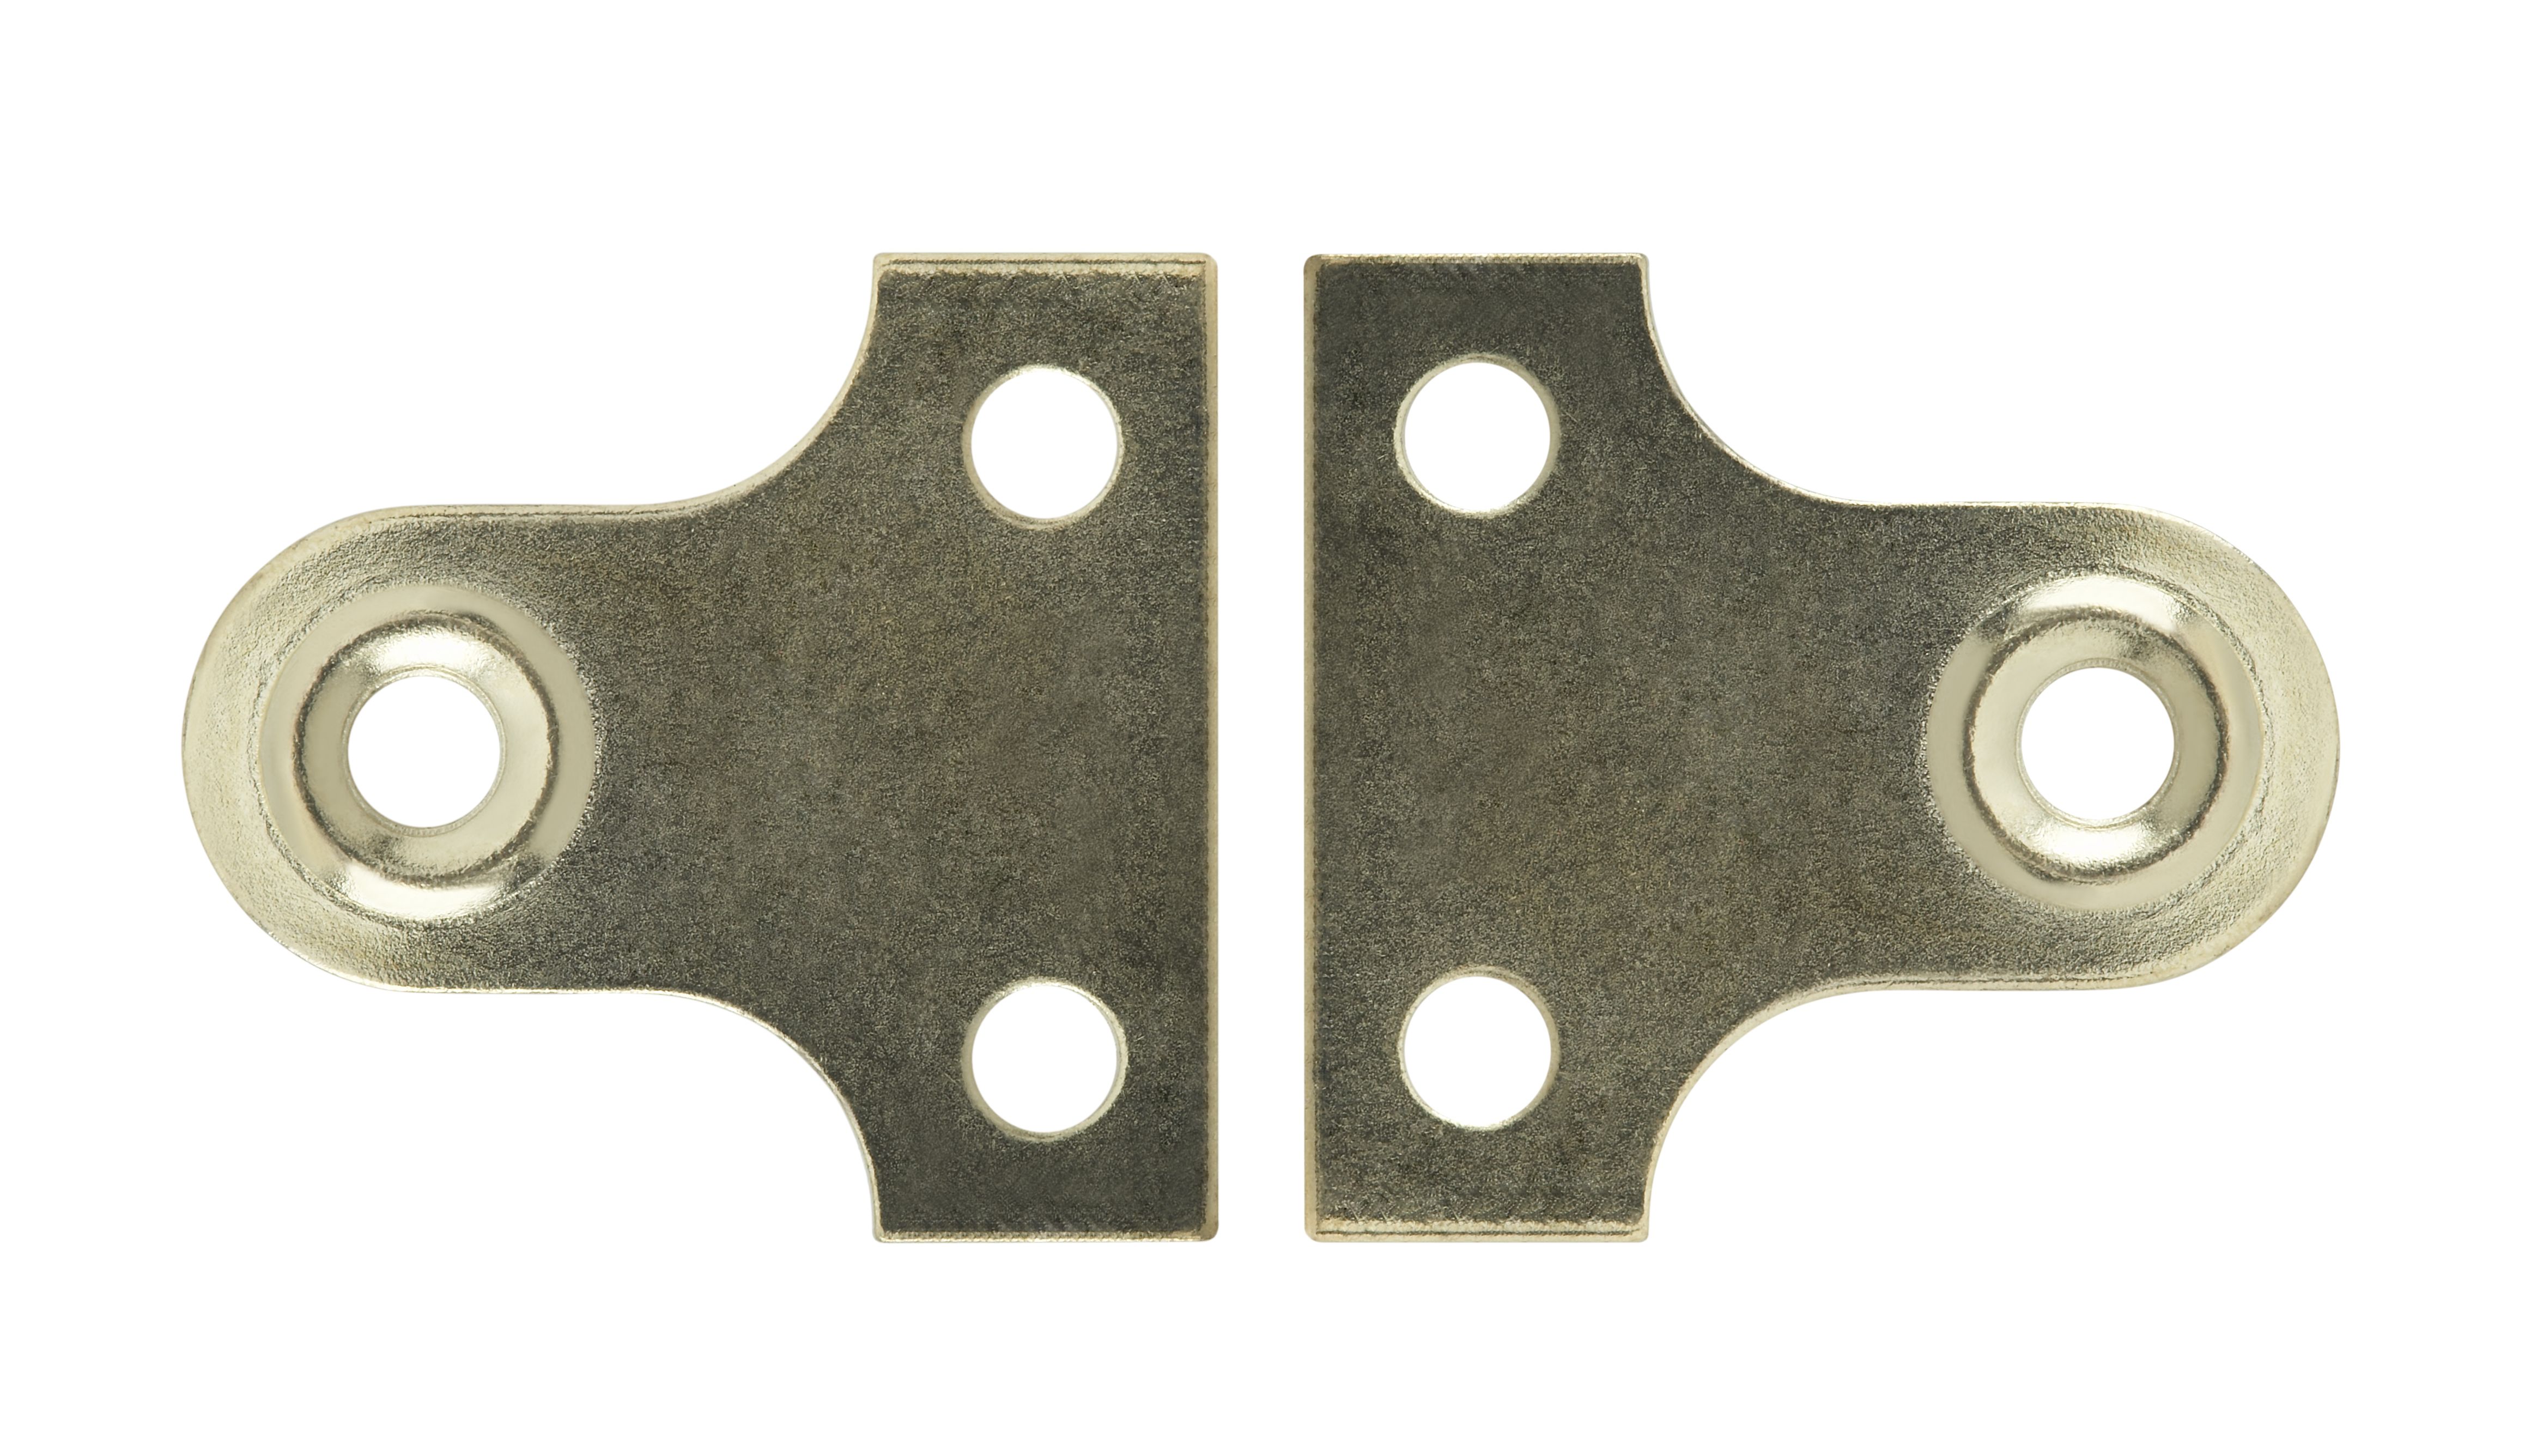 Phillips Pan head Mirror screw (L)25mm, Pack of 2